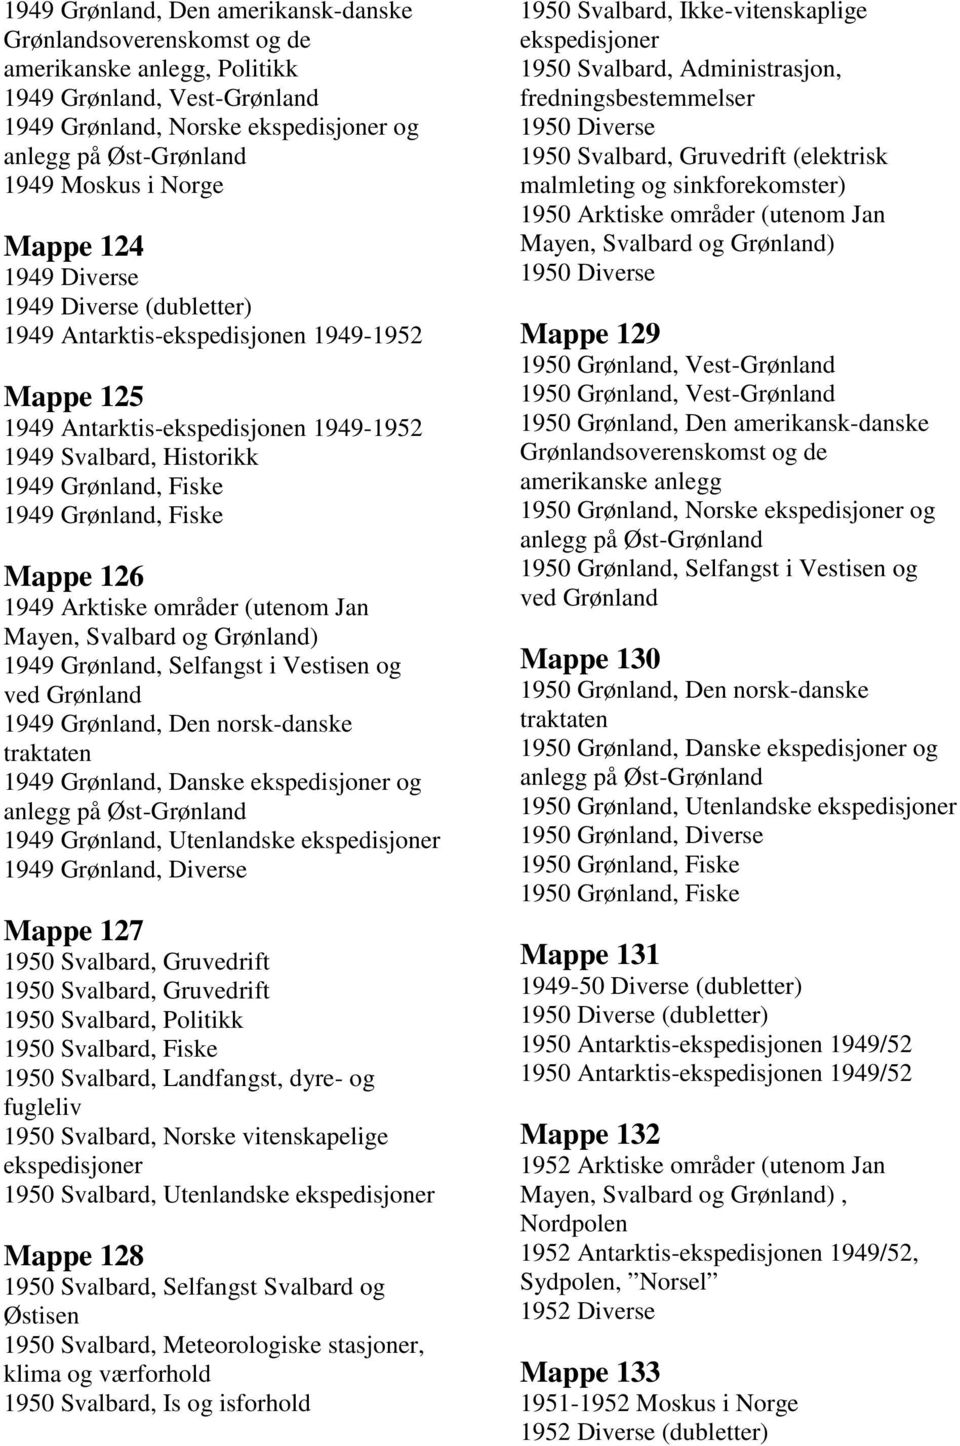 1949 Grønland, Selfangst i Vestisen og 1949 Grønland, Den norsk-danske 1949 Grønland, Danske og 1949 Grønland, Utenlandske 1949 Grønland, Diverse Mappe 127 1950 Svalbard, Gruvedrift 1950 Svalbard,